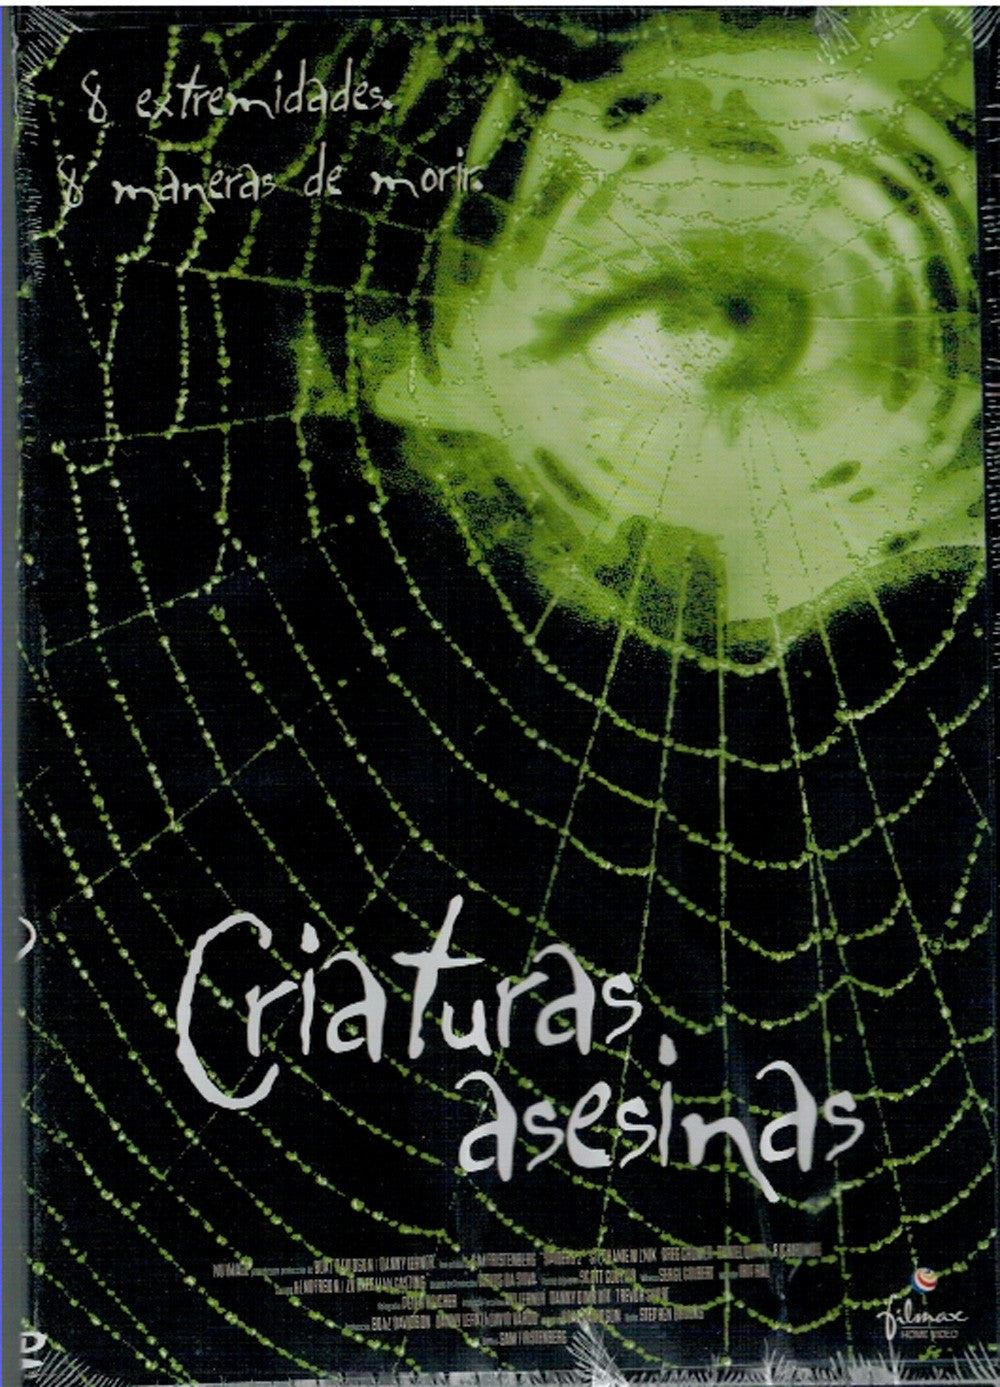 Criaturas asesinas (Spiders II: Breeding Ground) (DVD Nuevo)